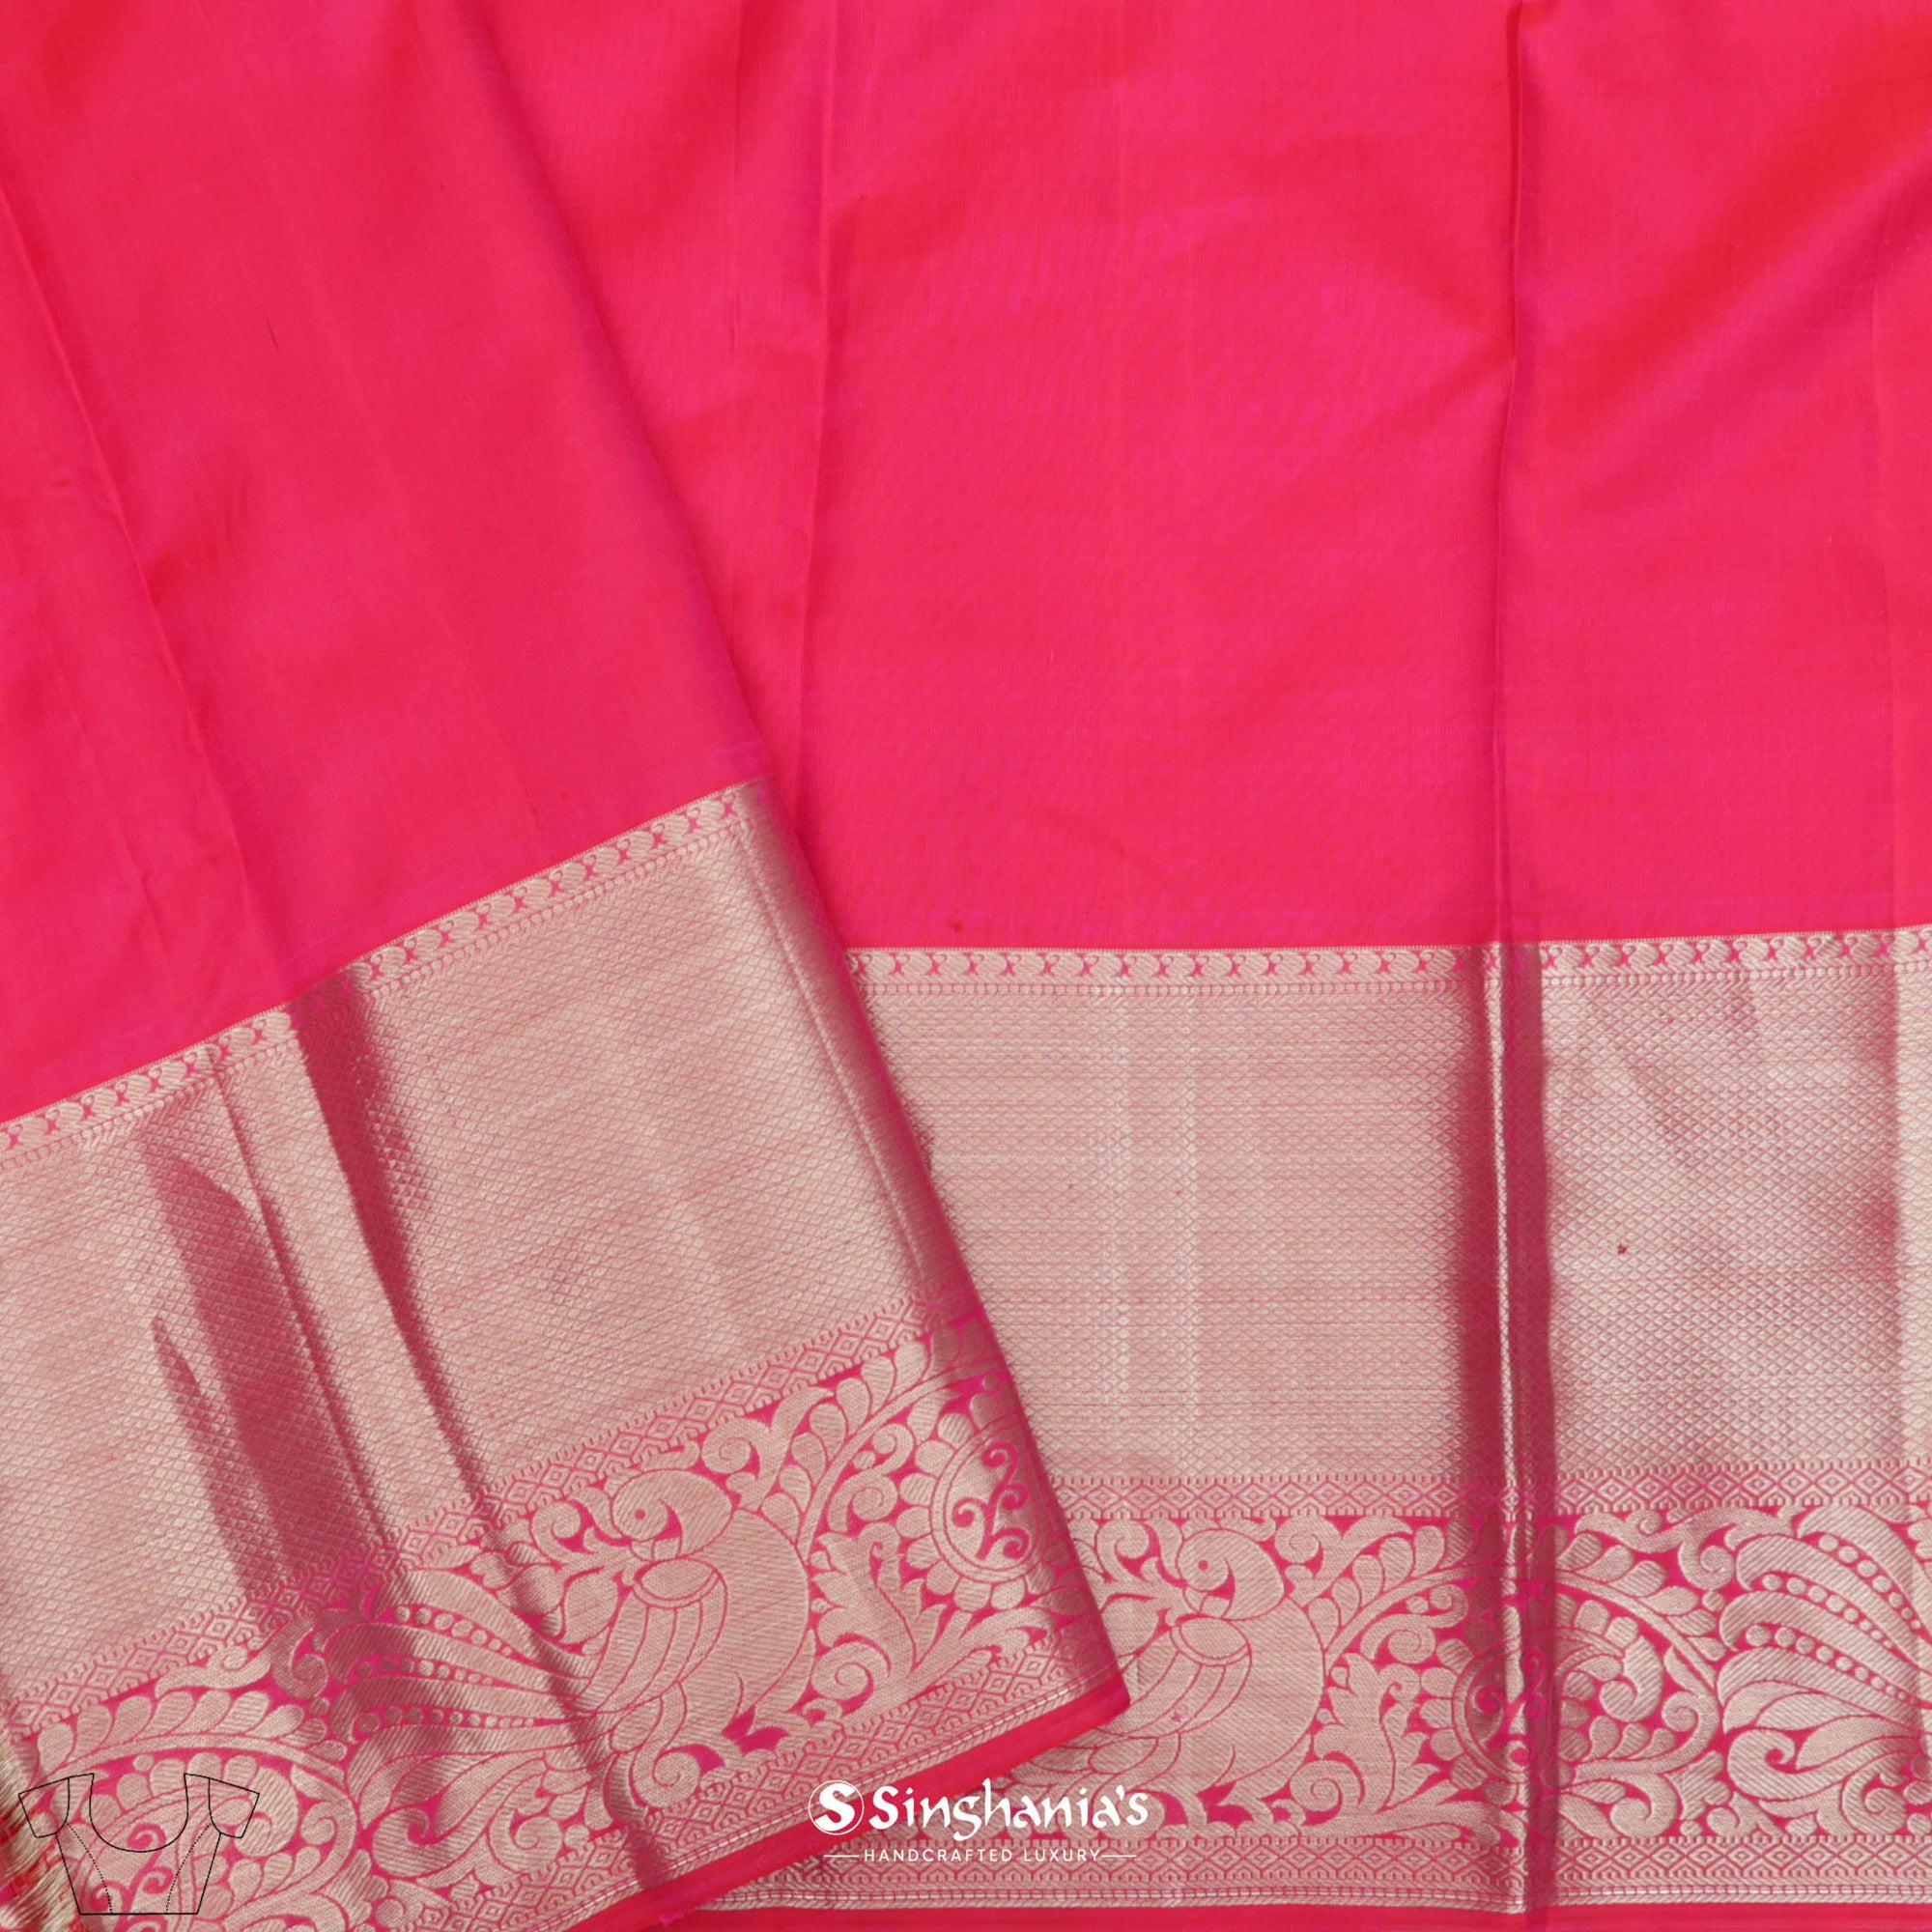 Castleton Green Kanjivaram Silk Saree With Floral Buttas Design